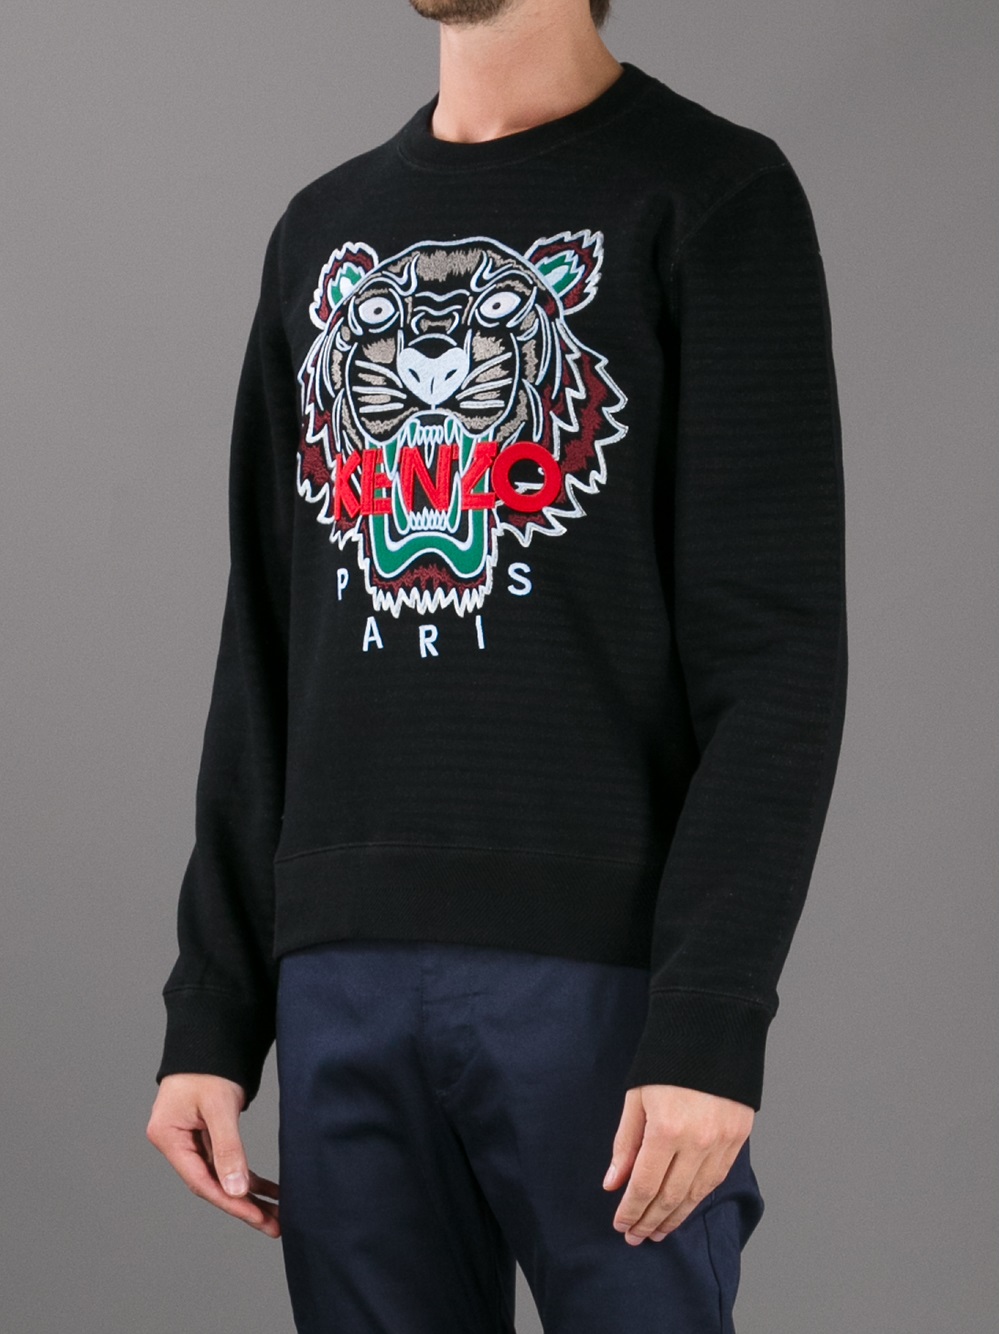 KENZO Slogan Tiger Print Sweatshirt in Black for Men - Lyst